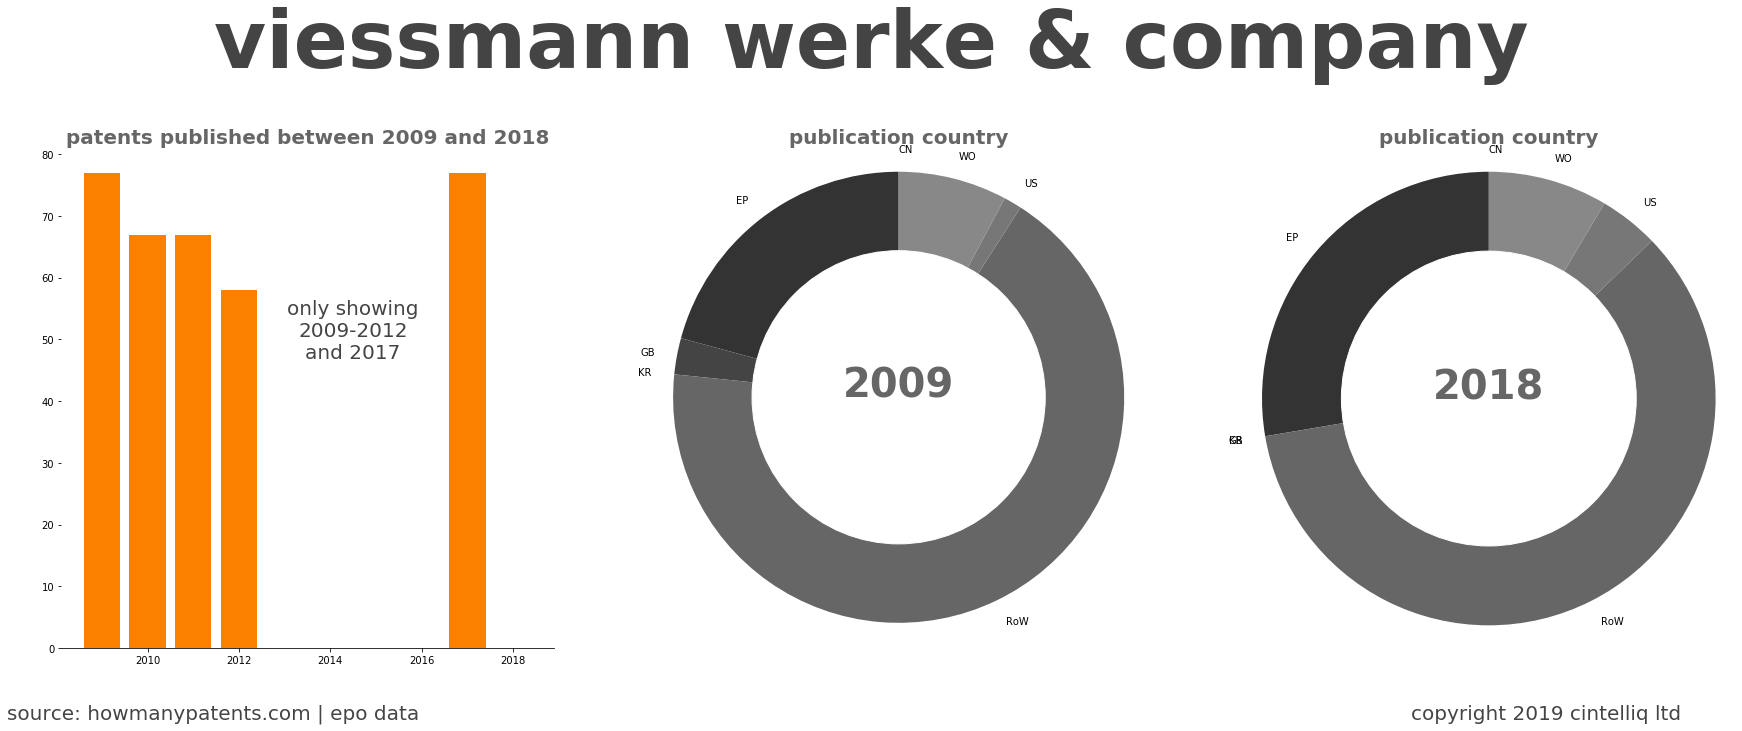 summary of patents for Viessmann Werke & Company